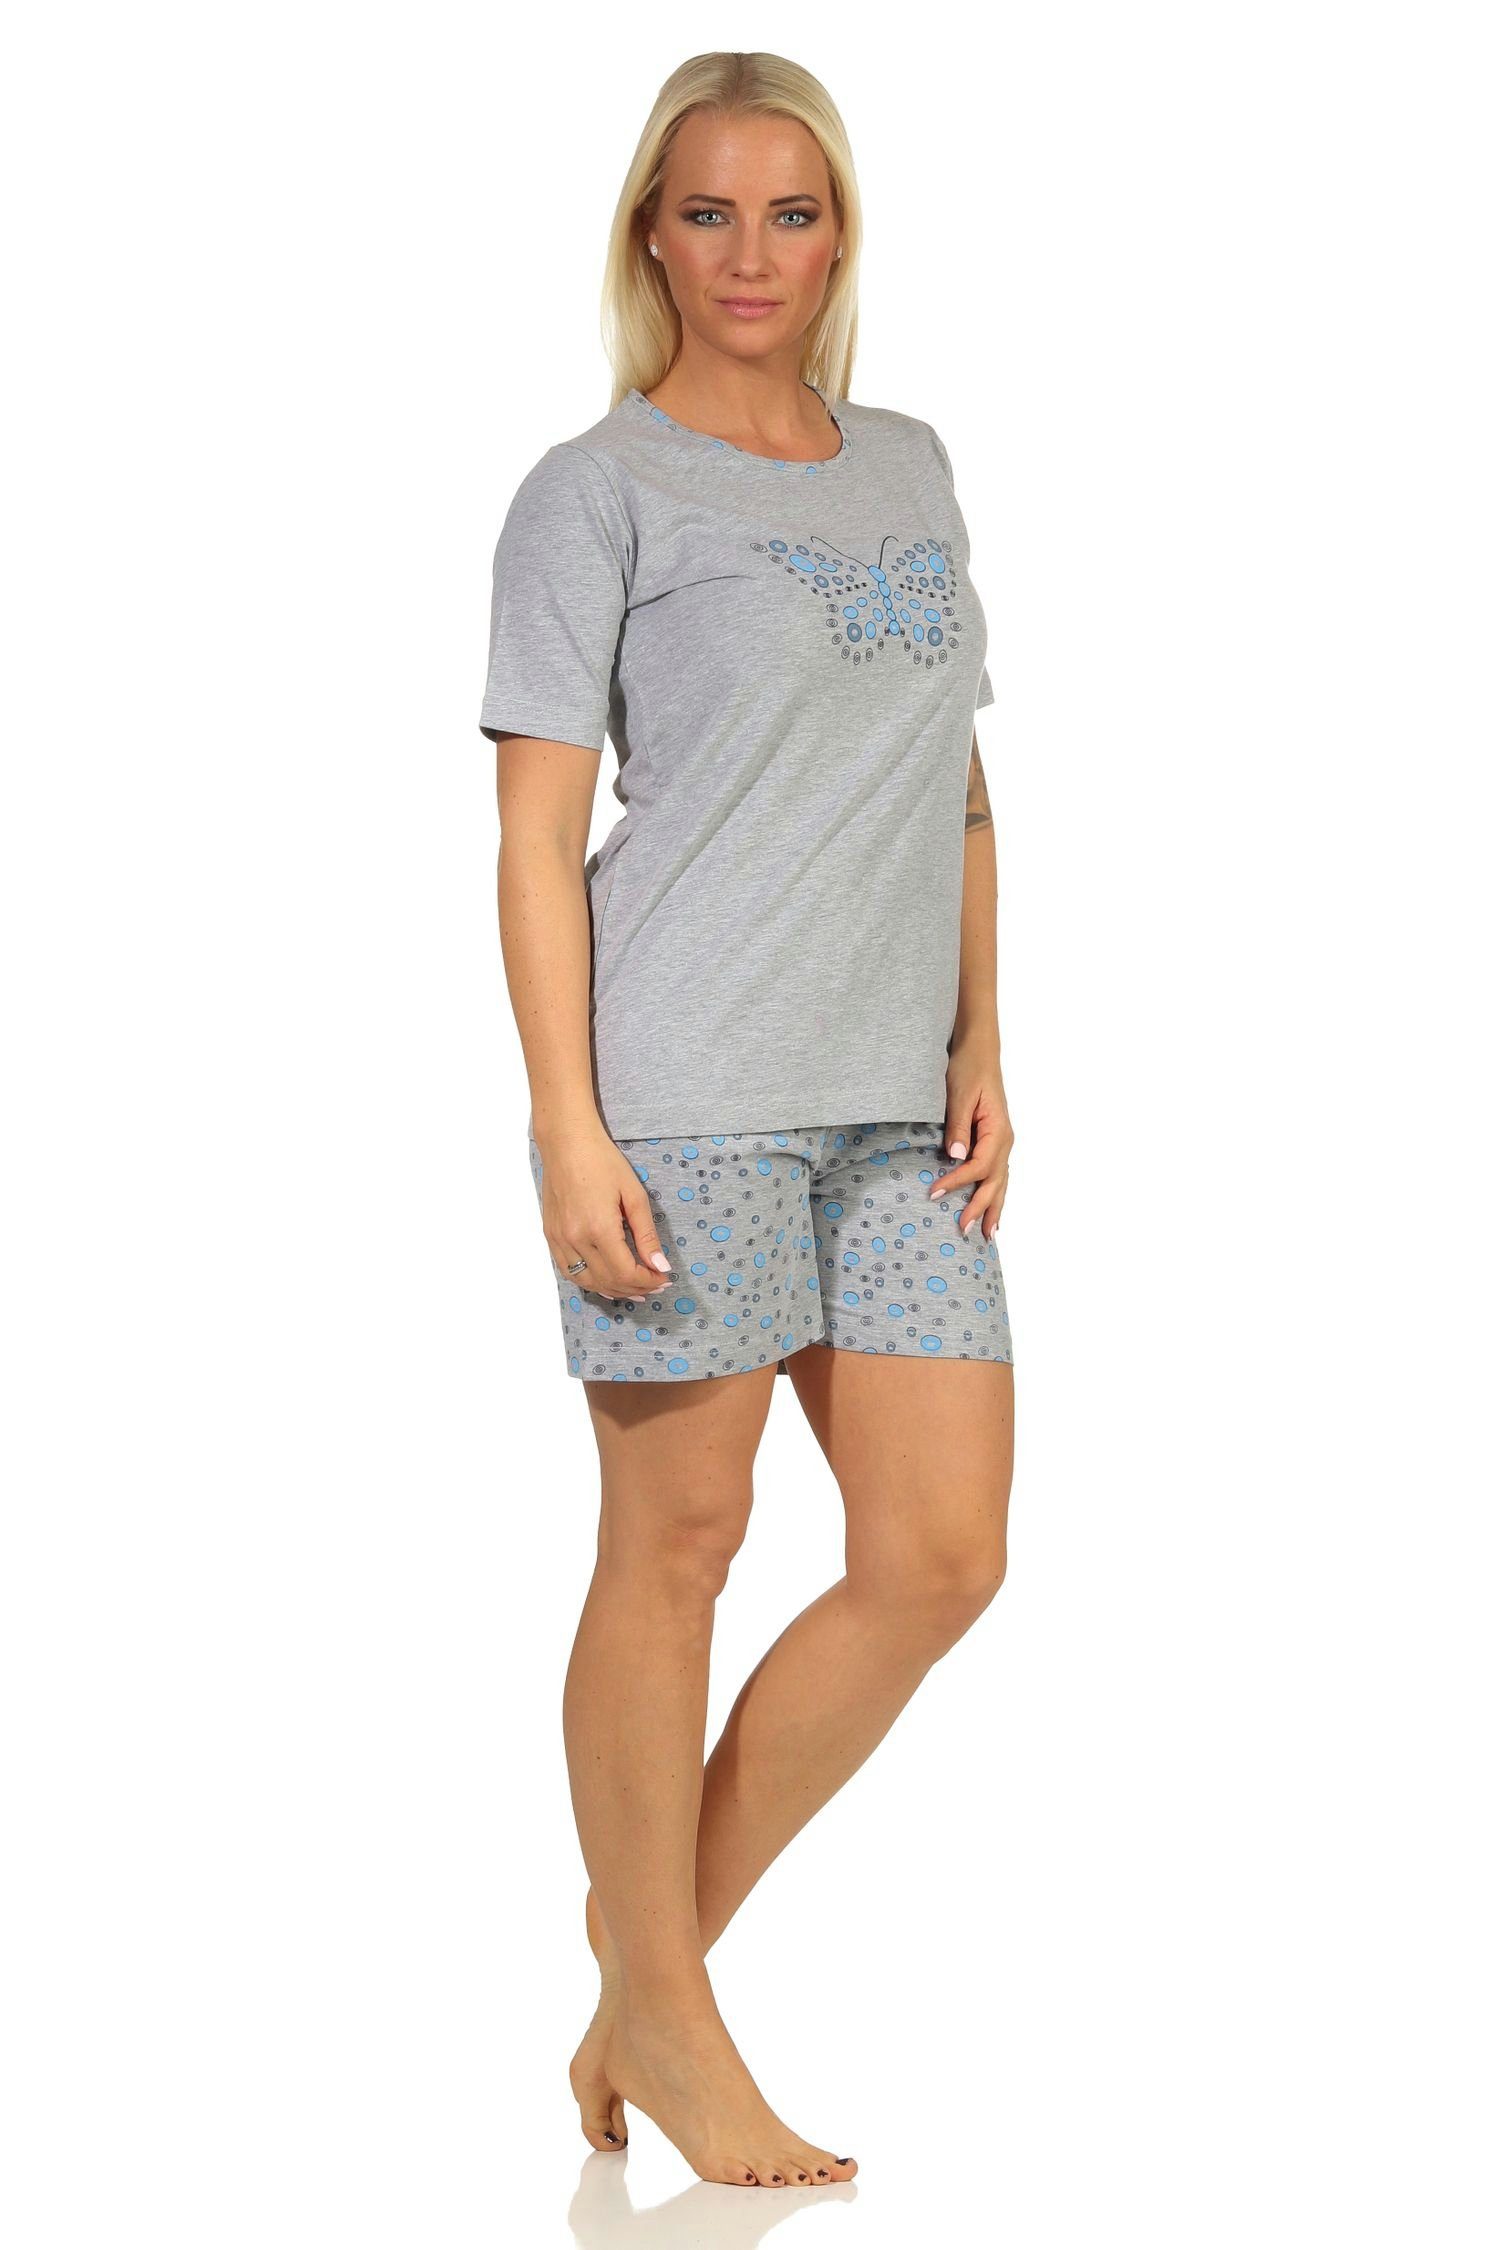 Shorty Pyjama Damen by kurzarm mit Schmetterling-Motiv Pyjama RELAX Schlafanzug, Normann blau